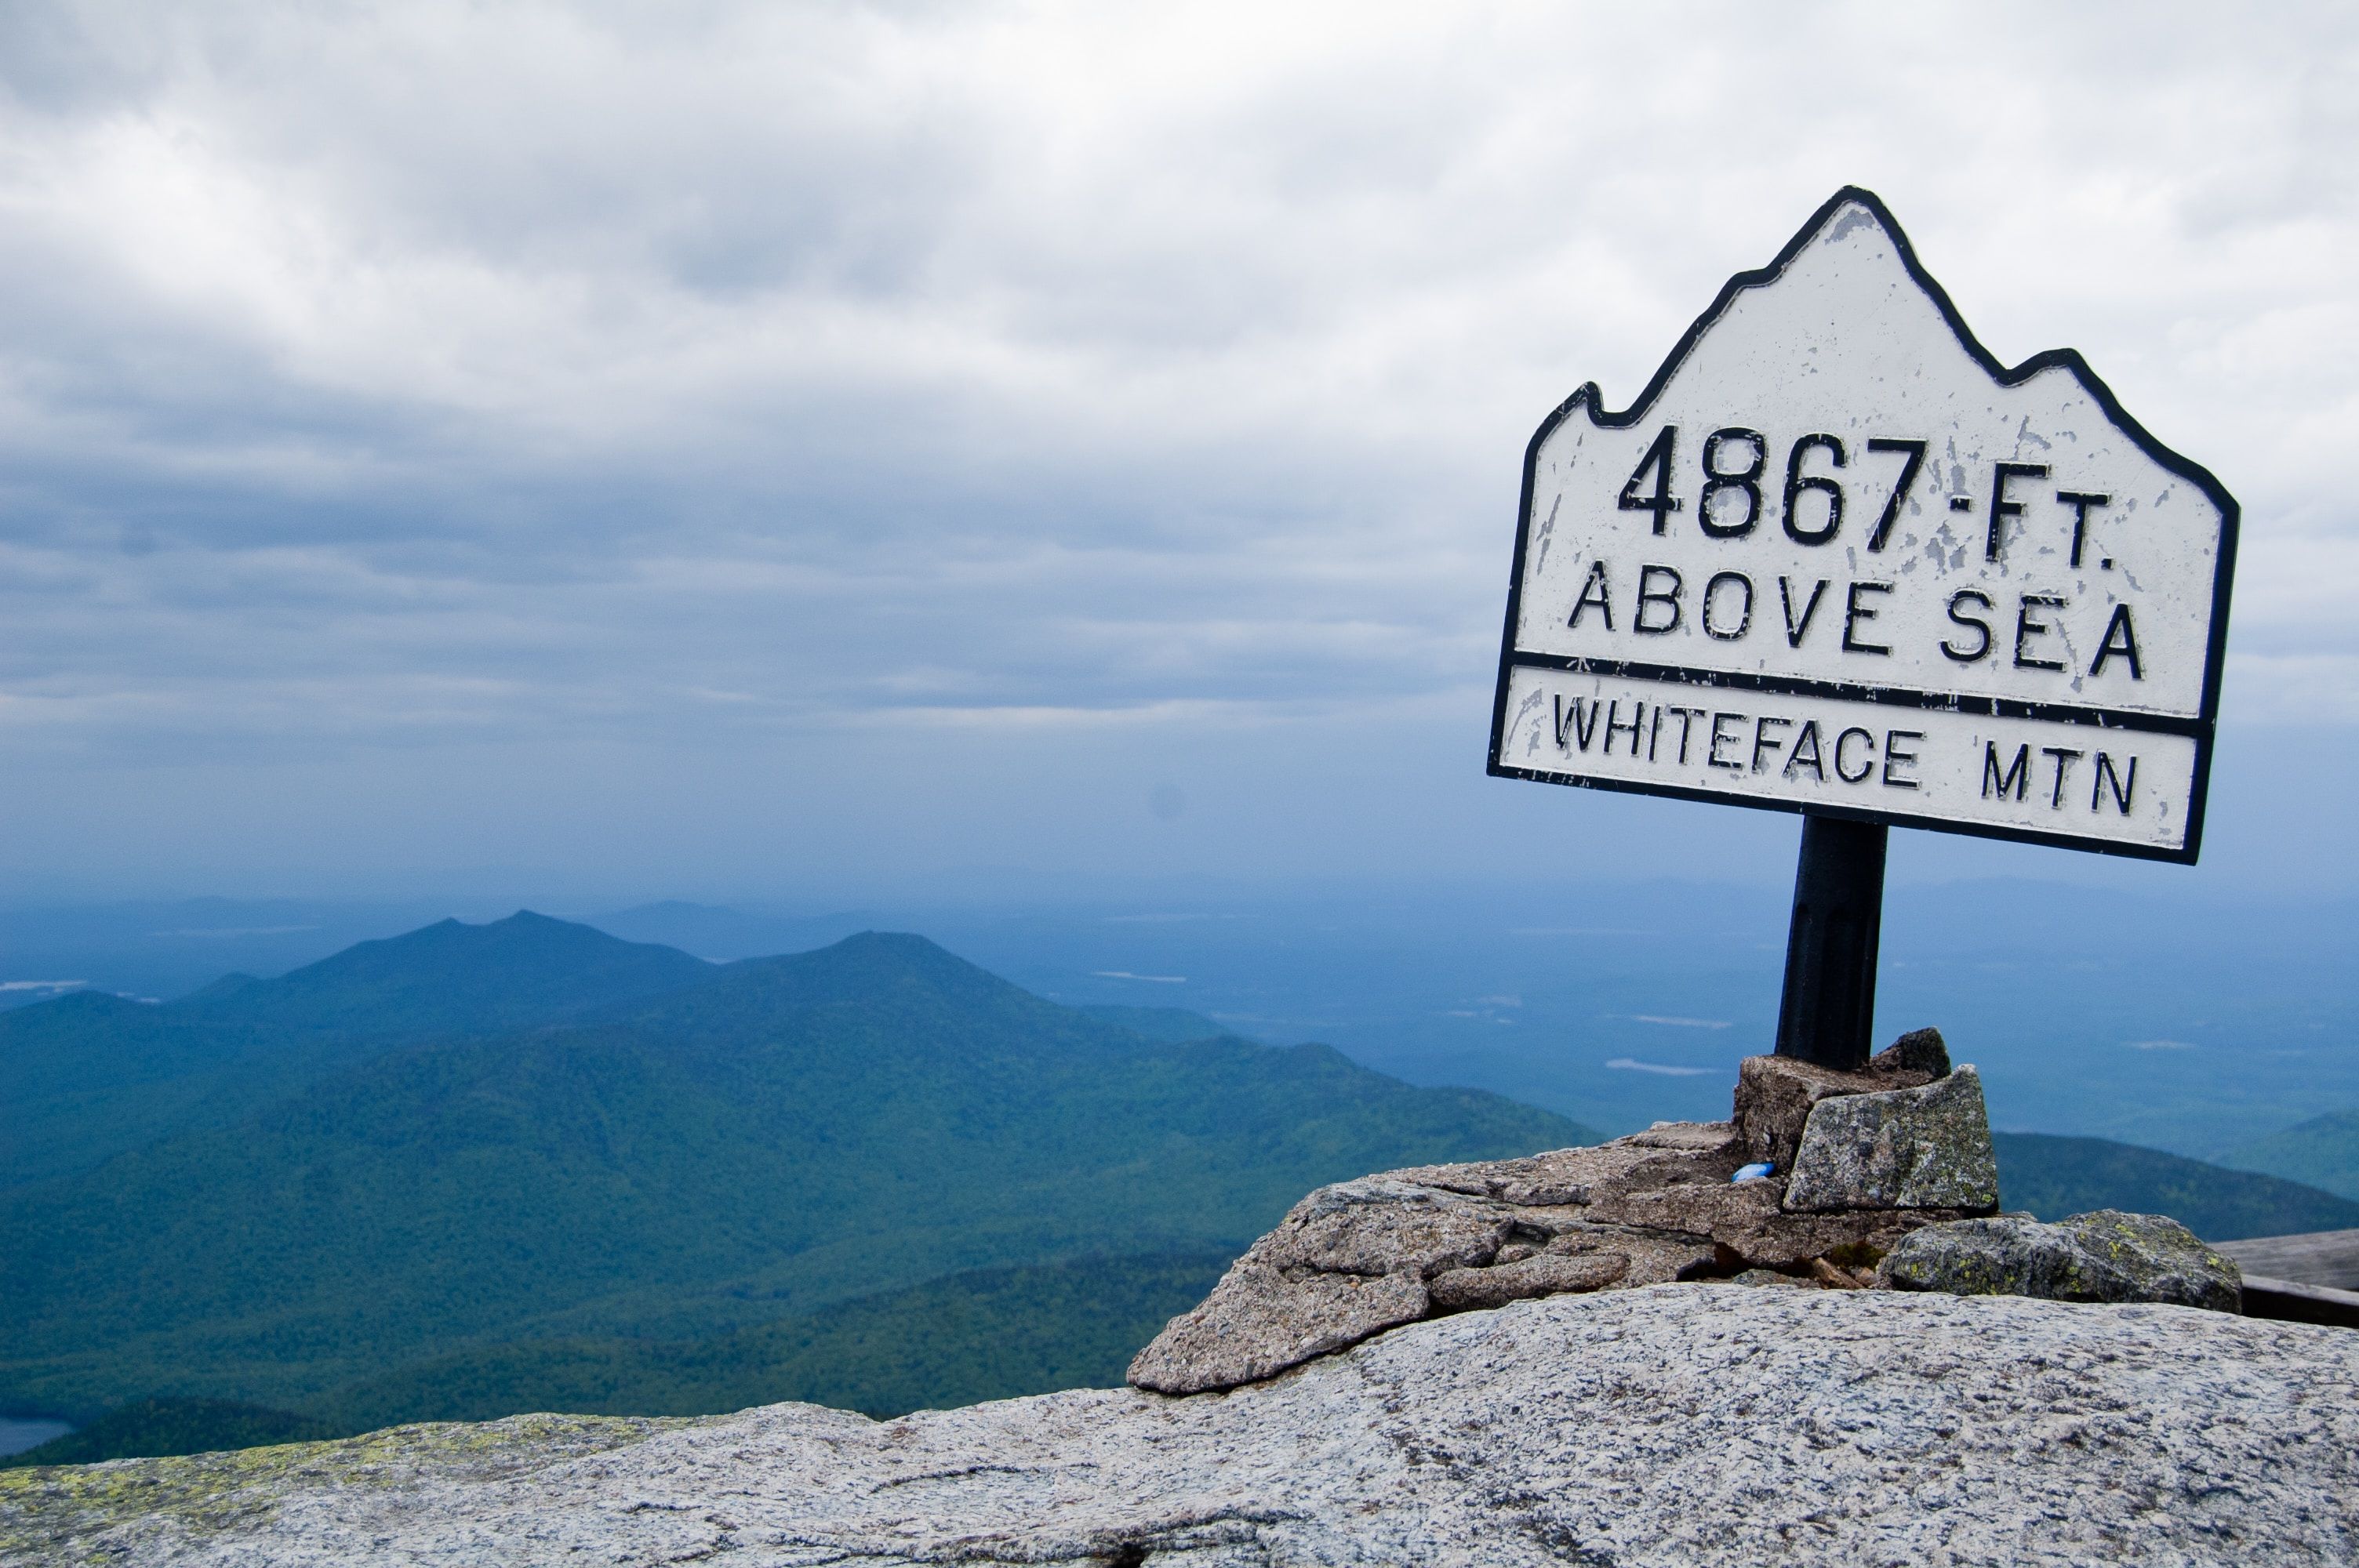 Whiteface Mountain in the Adirondacks, NY